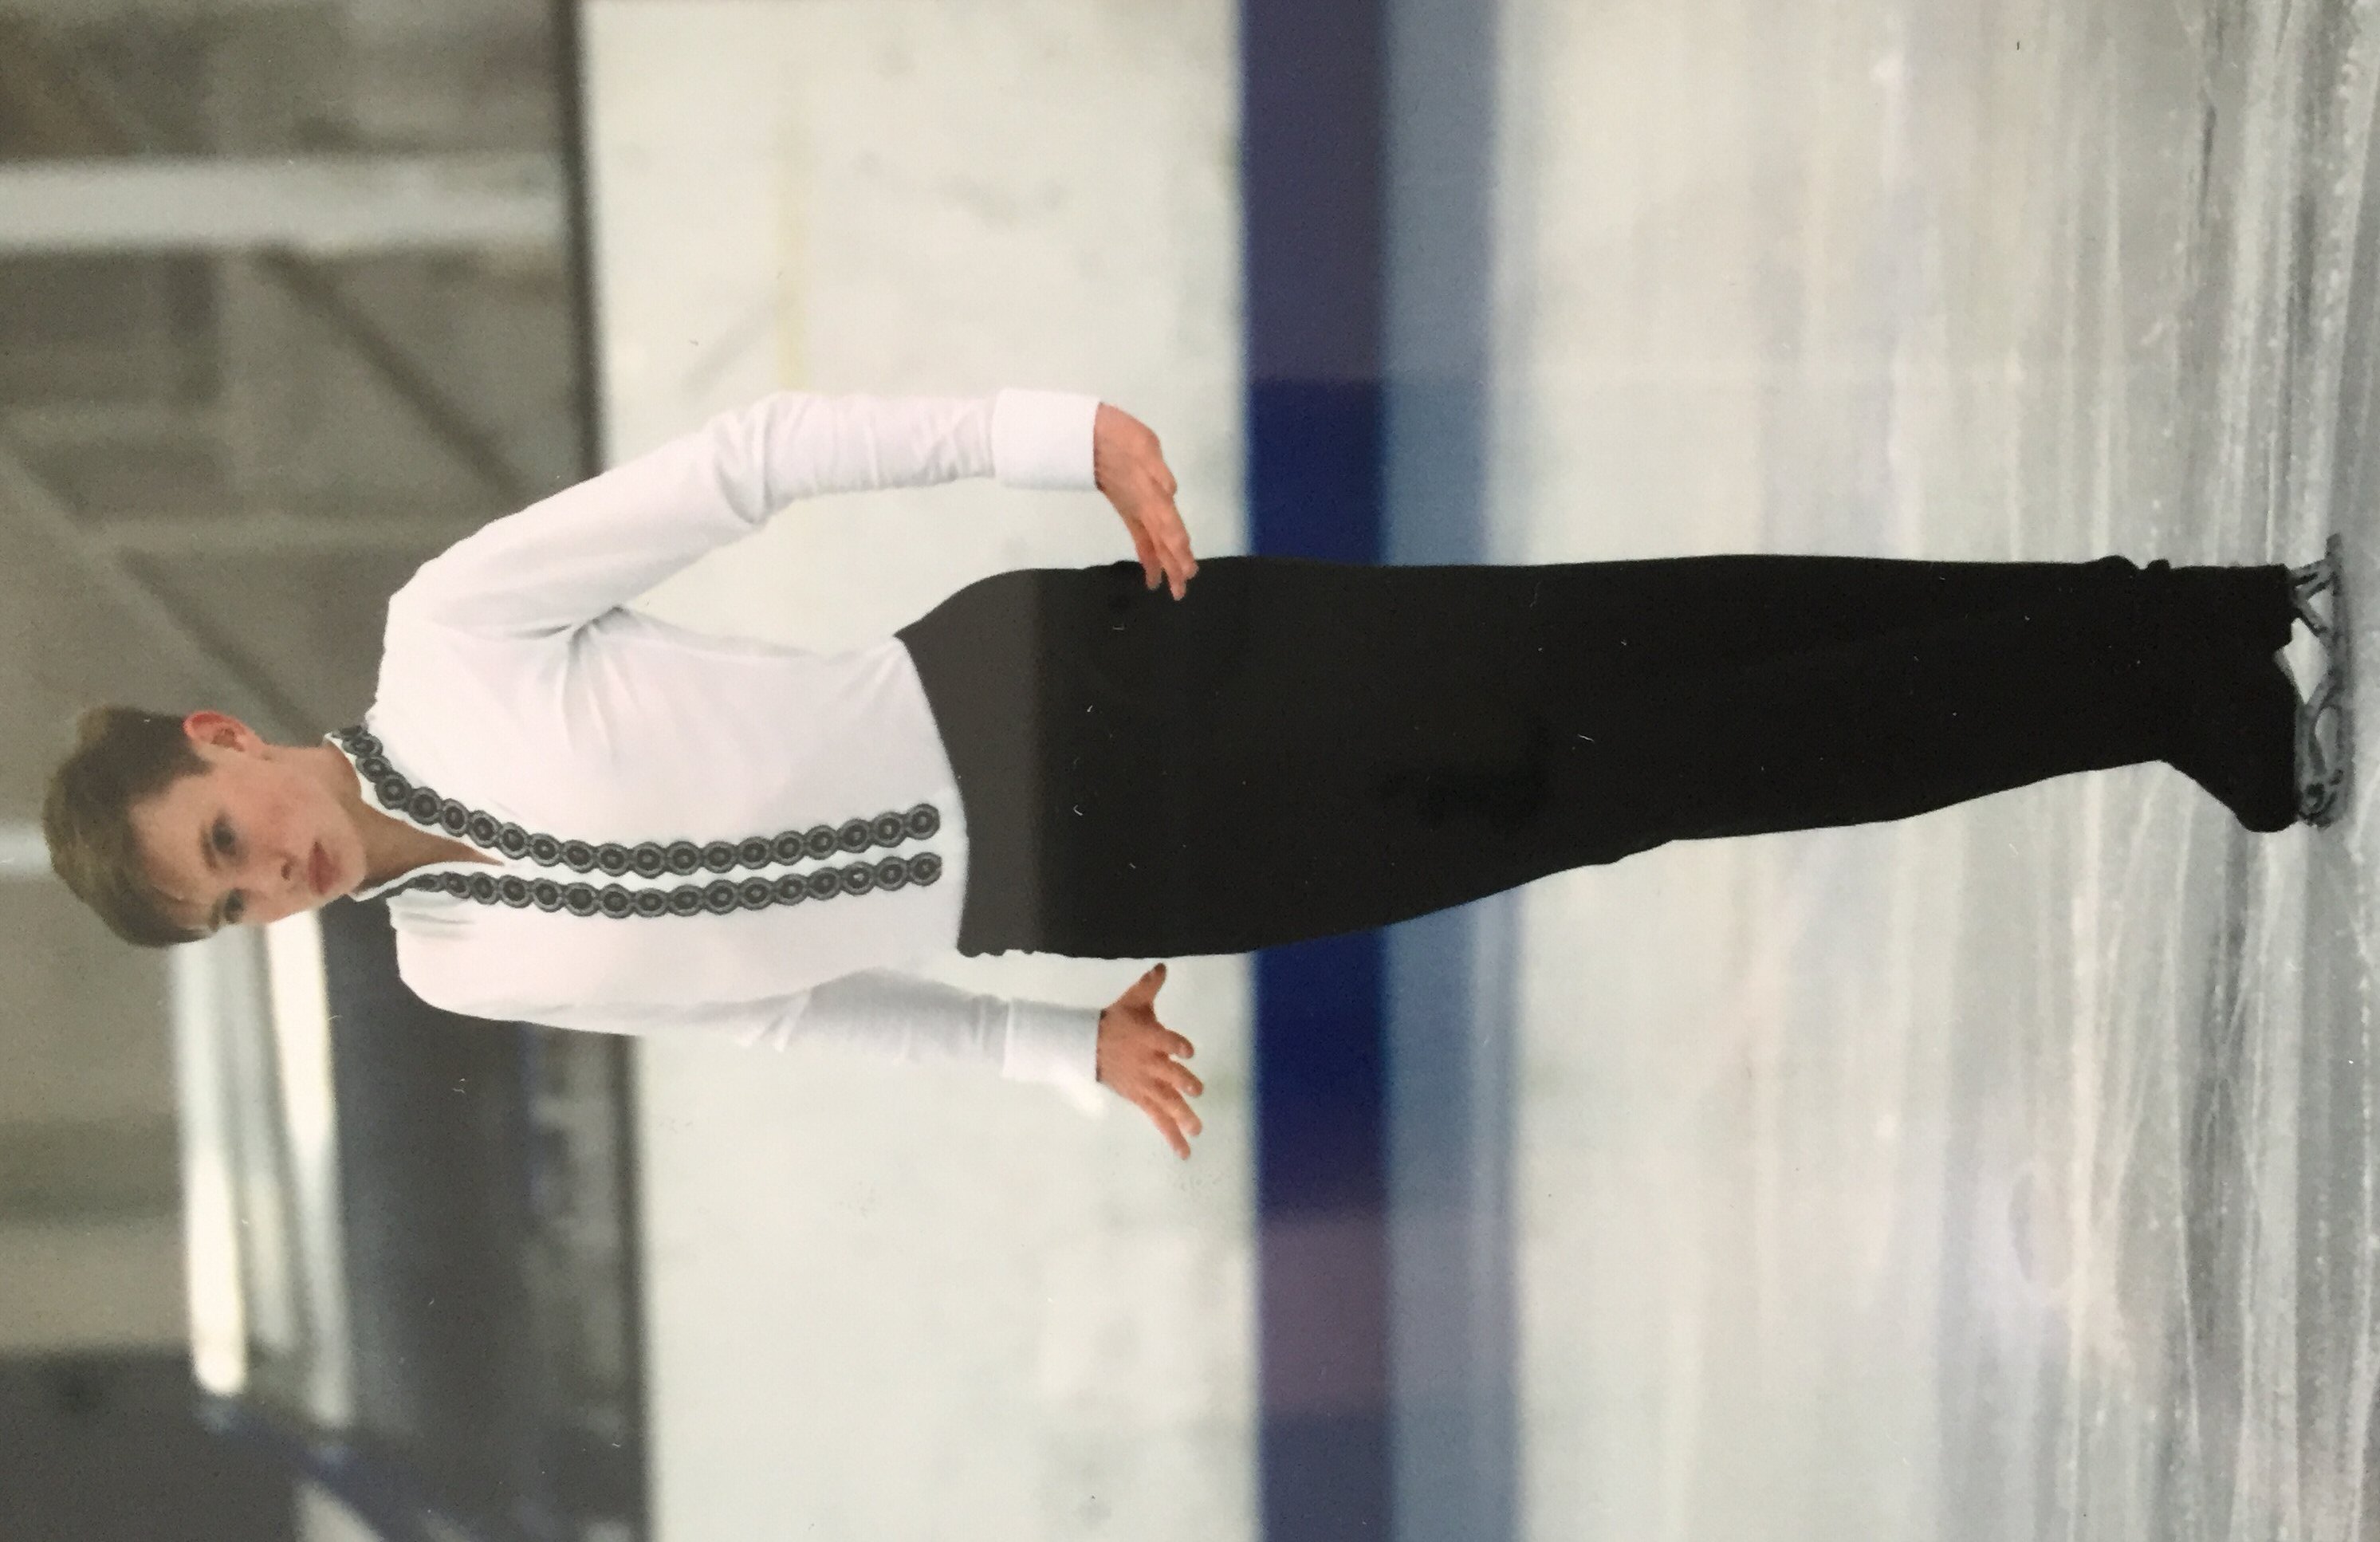 Solo figure skater in white body shirt